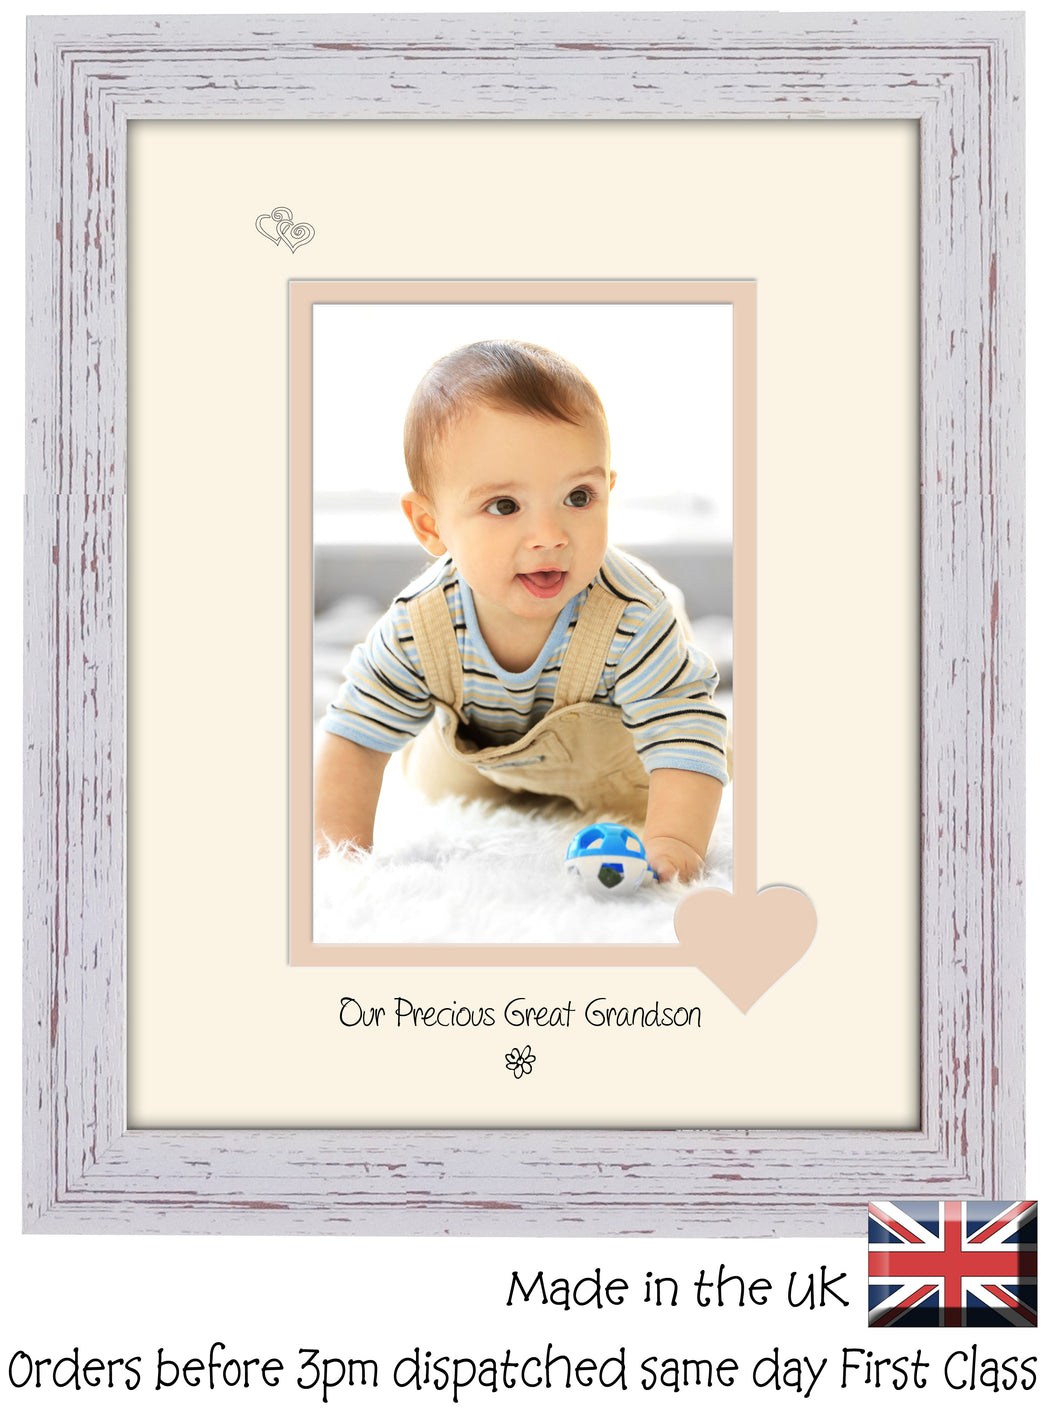 Great Grandson Photo Frame - Our precious Great Grandson Portrait photo frame 6